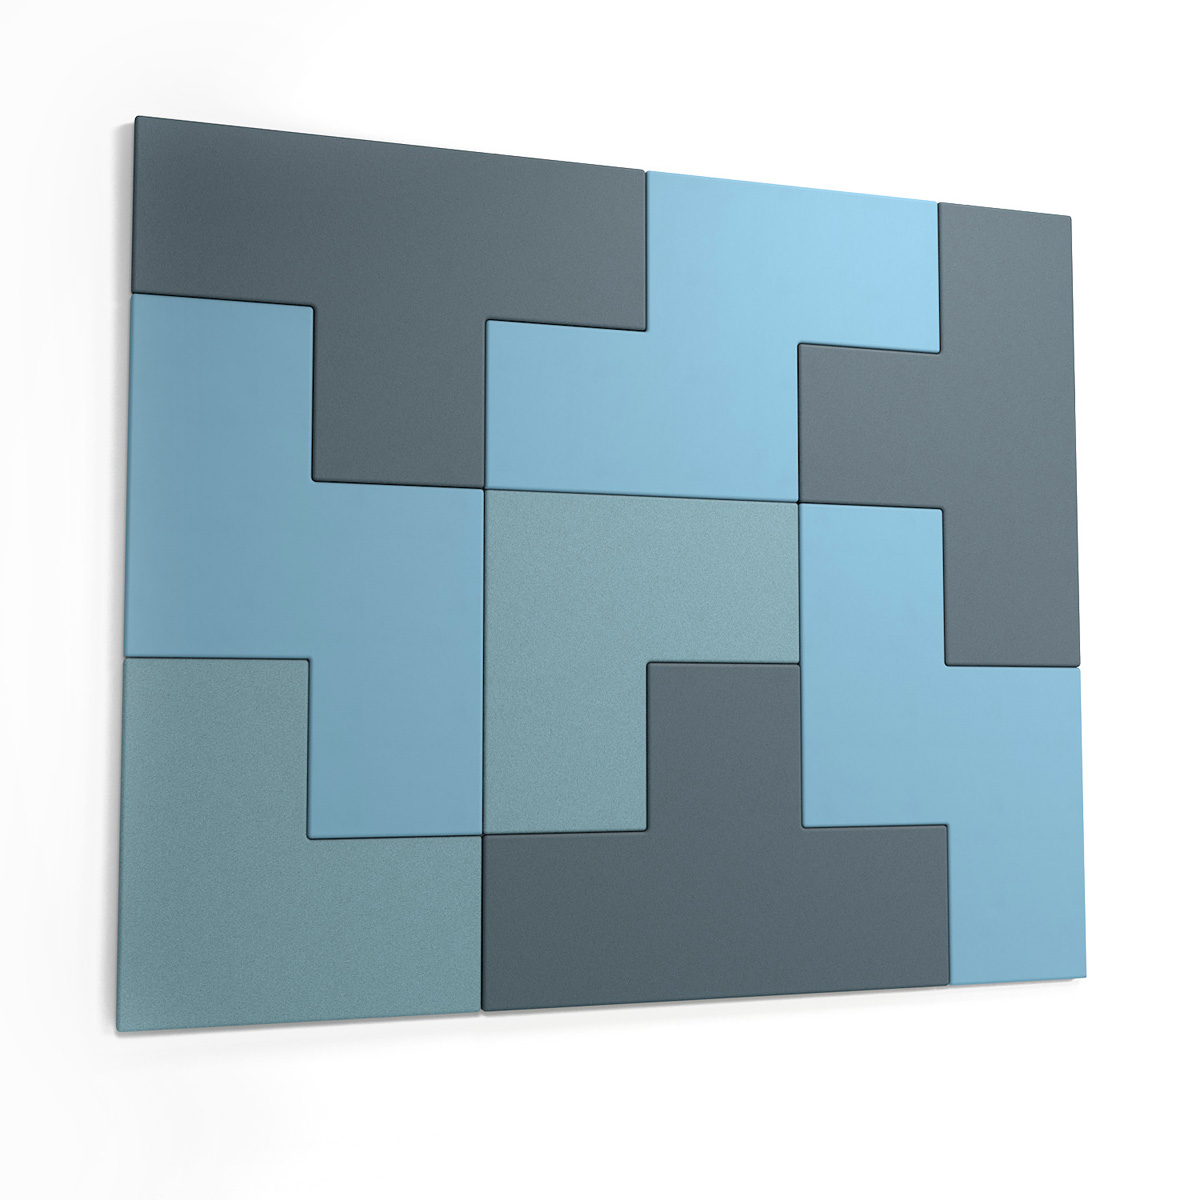 TETRATAK™ Interlocking Acoustic Soundproofing Wall Tile Panels